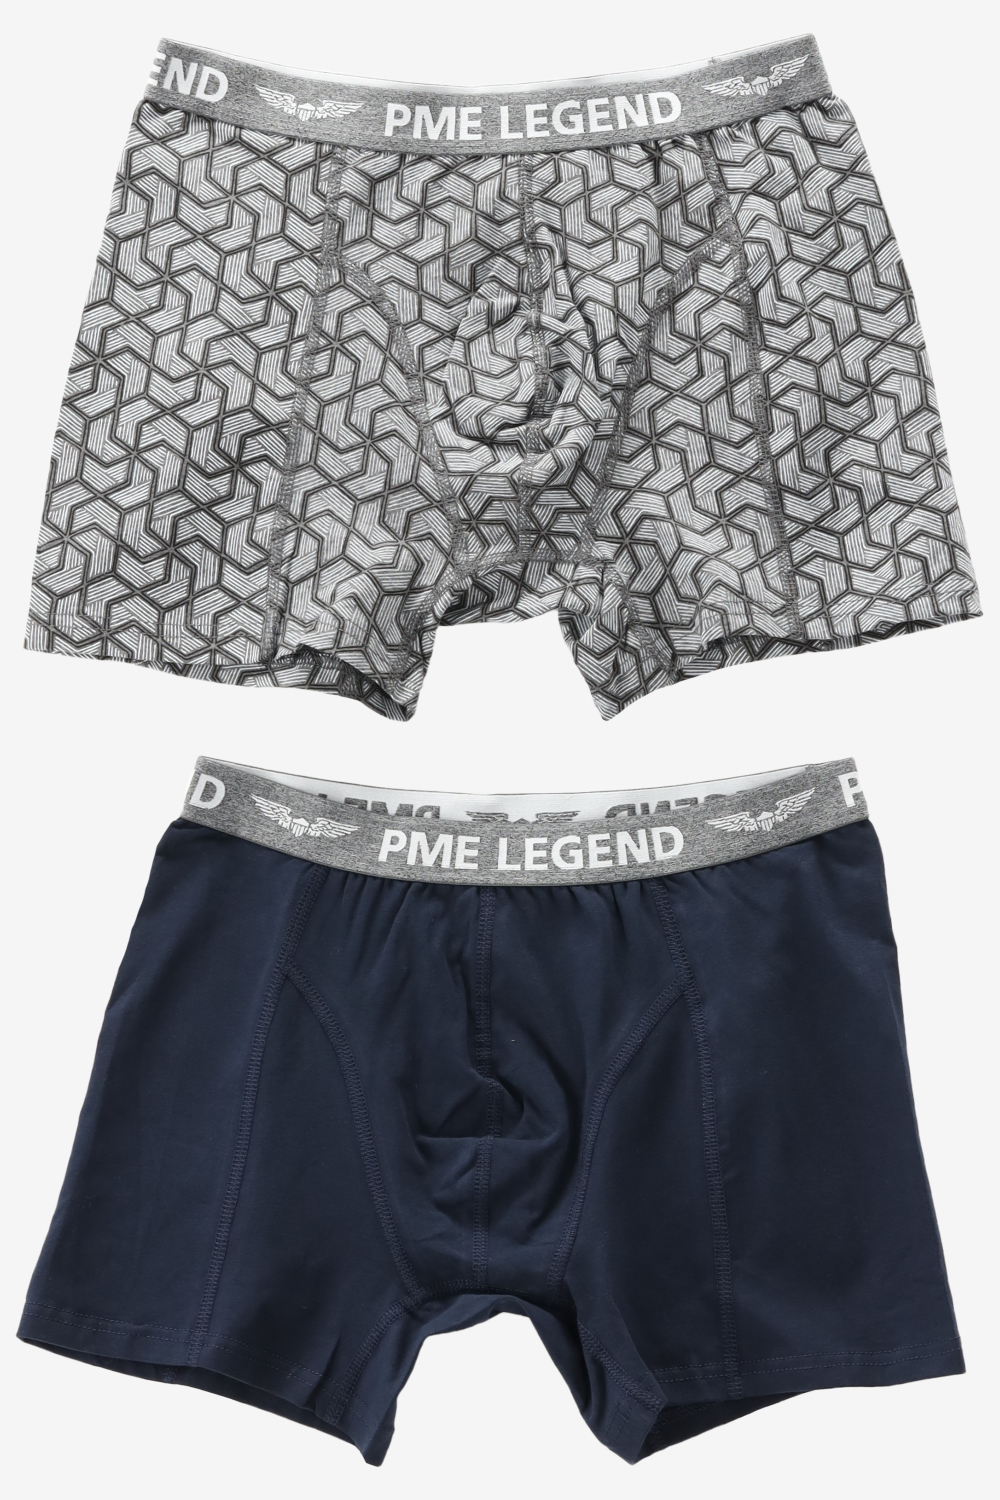 Pme legend underwear maat XXL